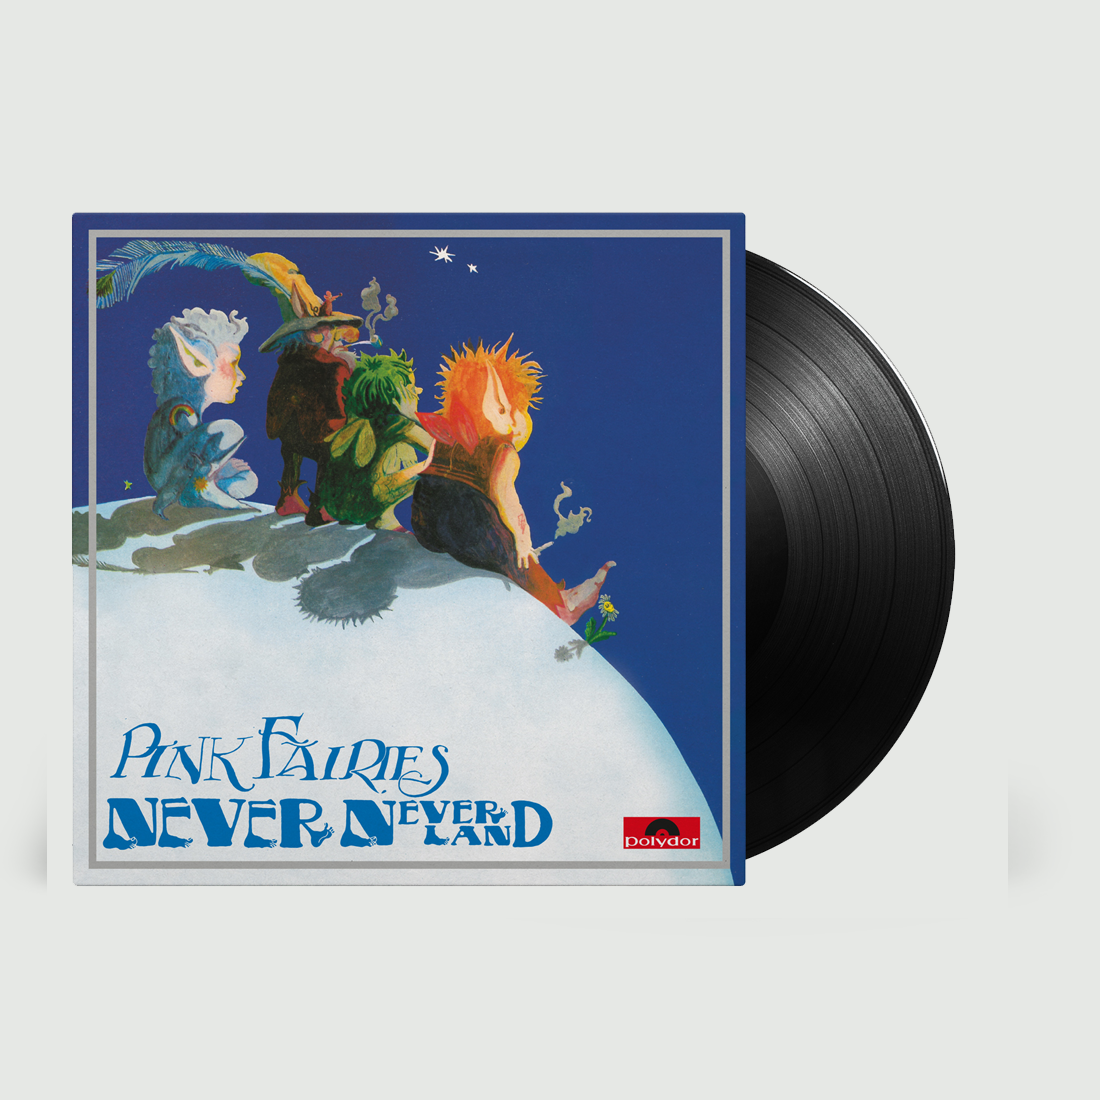 Neverneverland: Limited Edition Vinyl LP